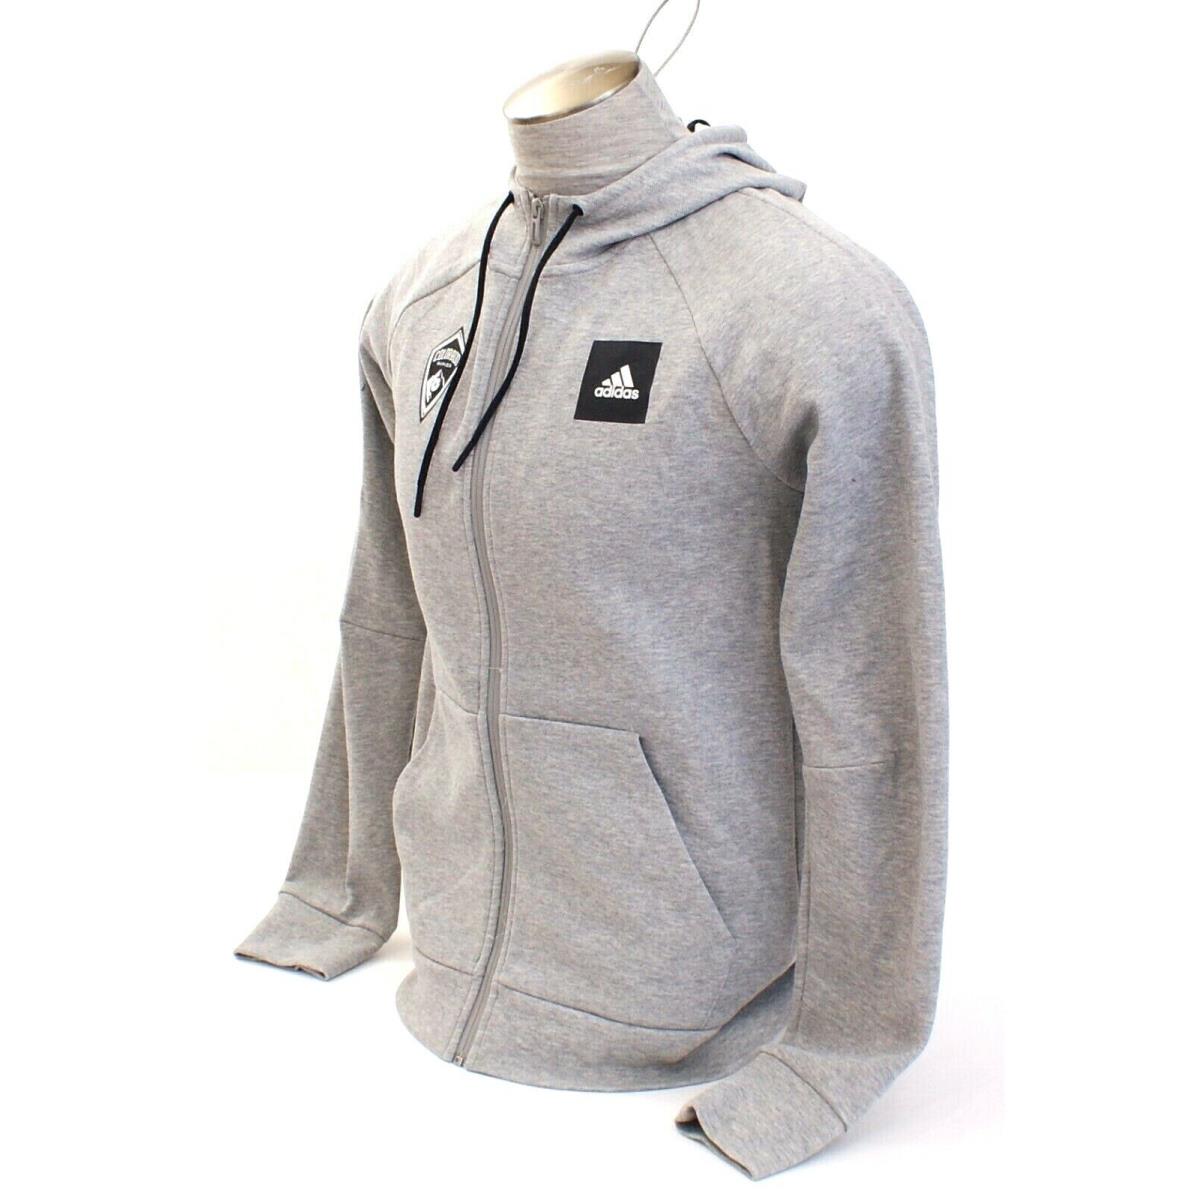 Adidas clothing  - Gray 1